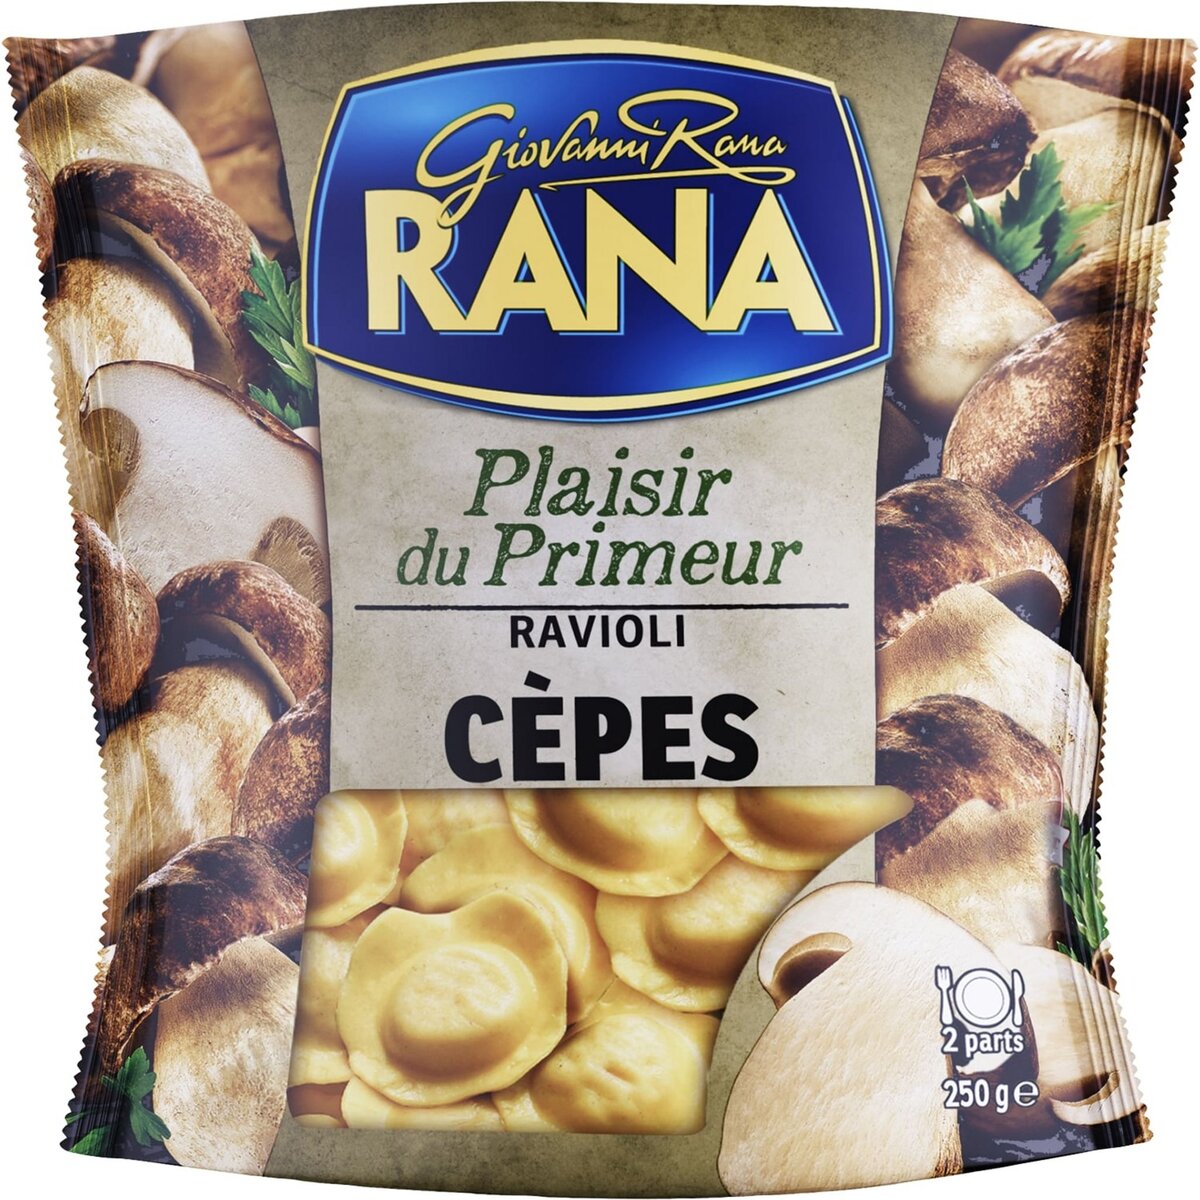 RANA Ravioli aux cèpes 2 portions 250g pas cher 